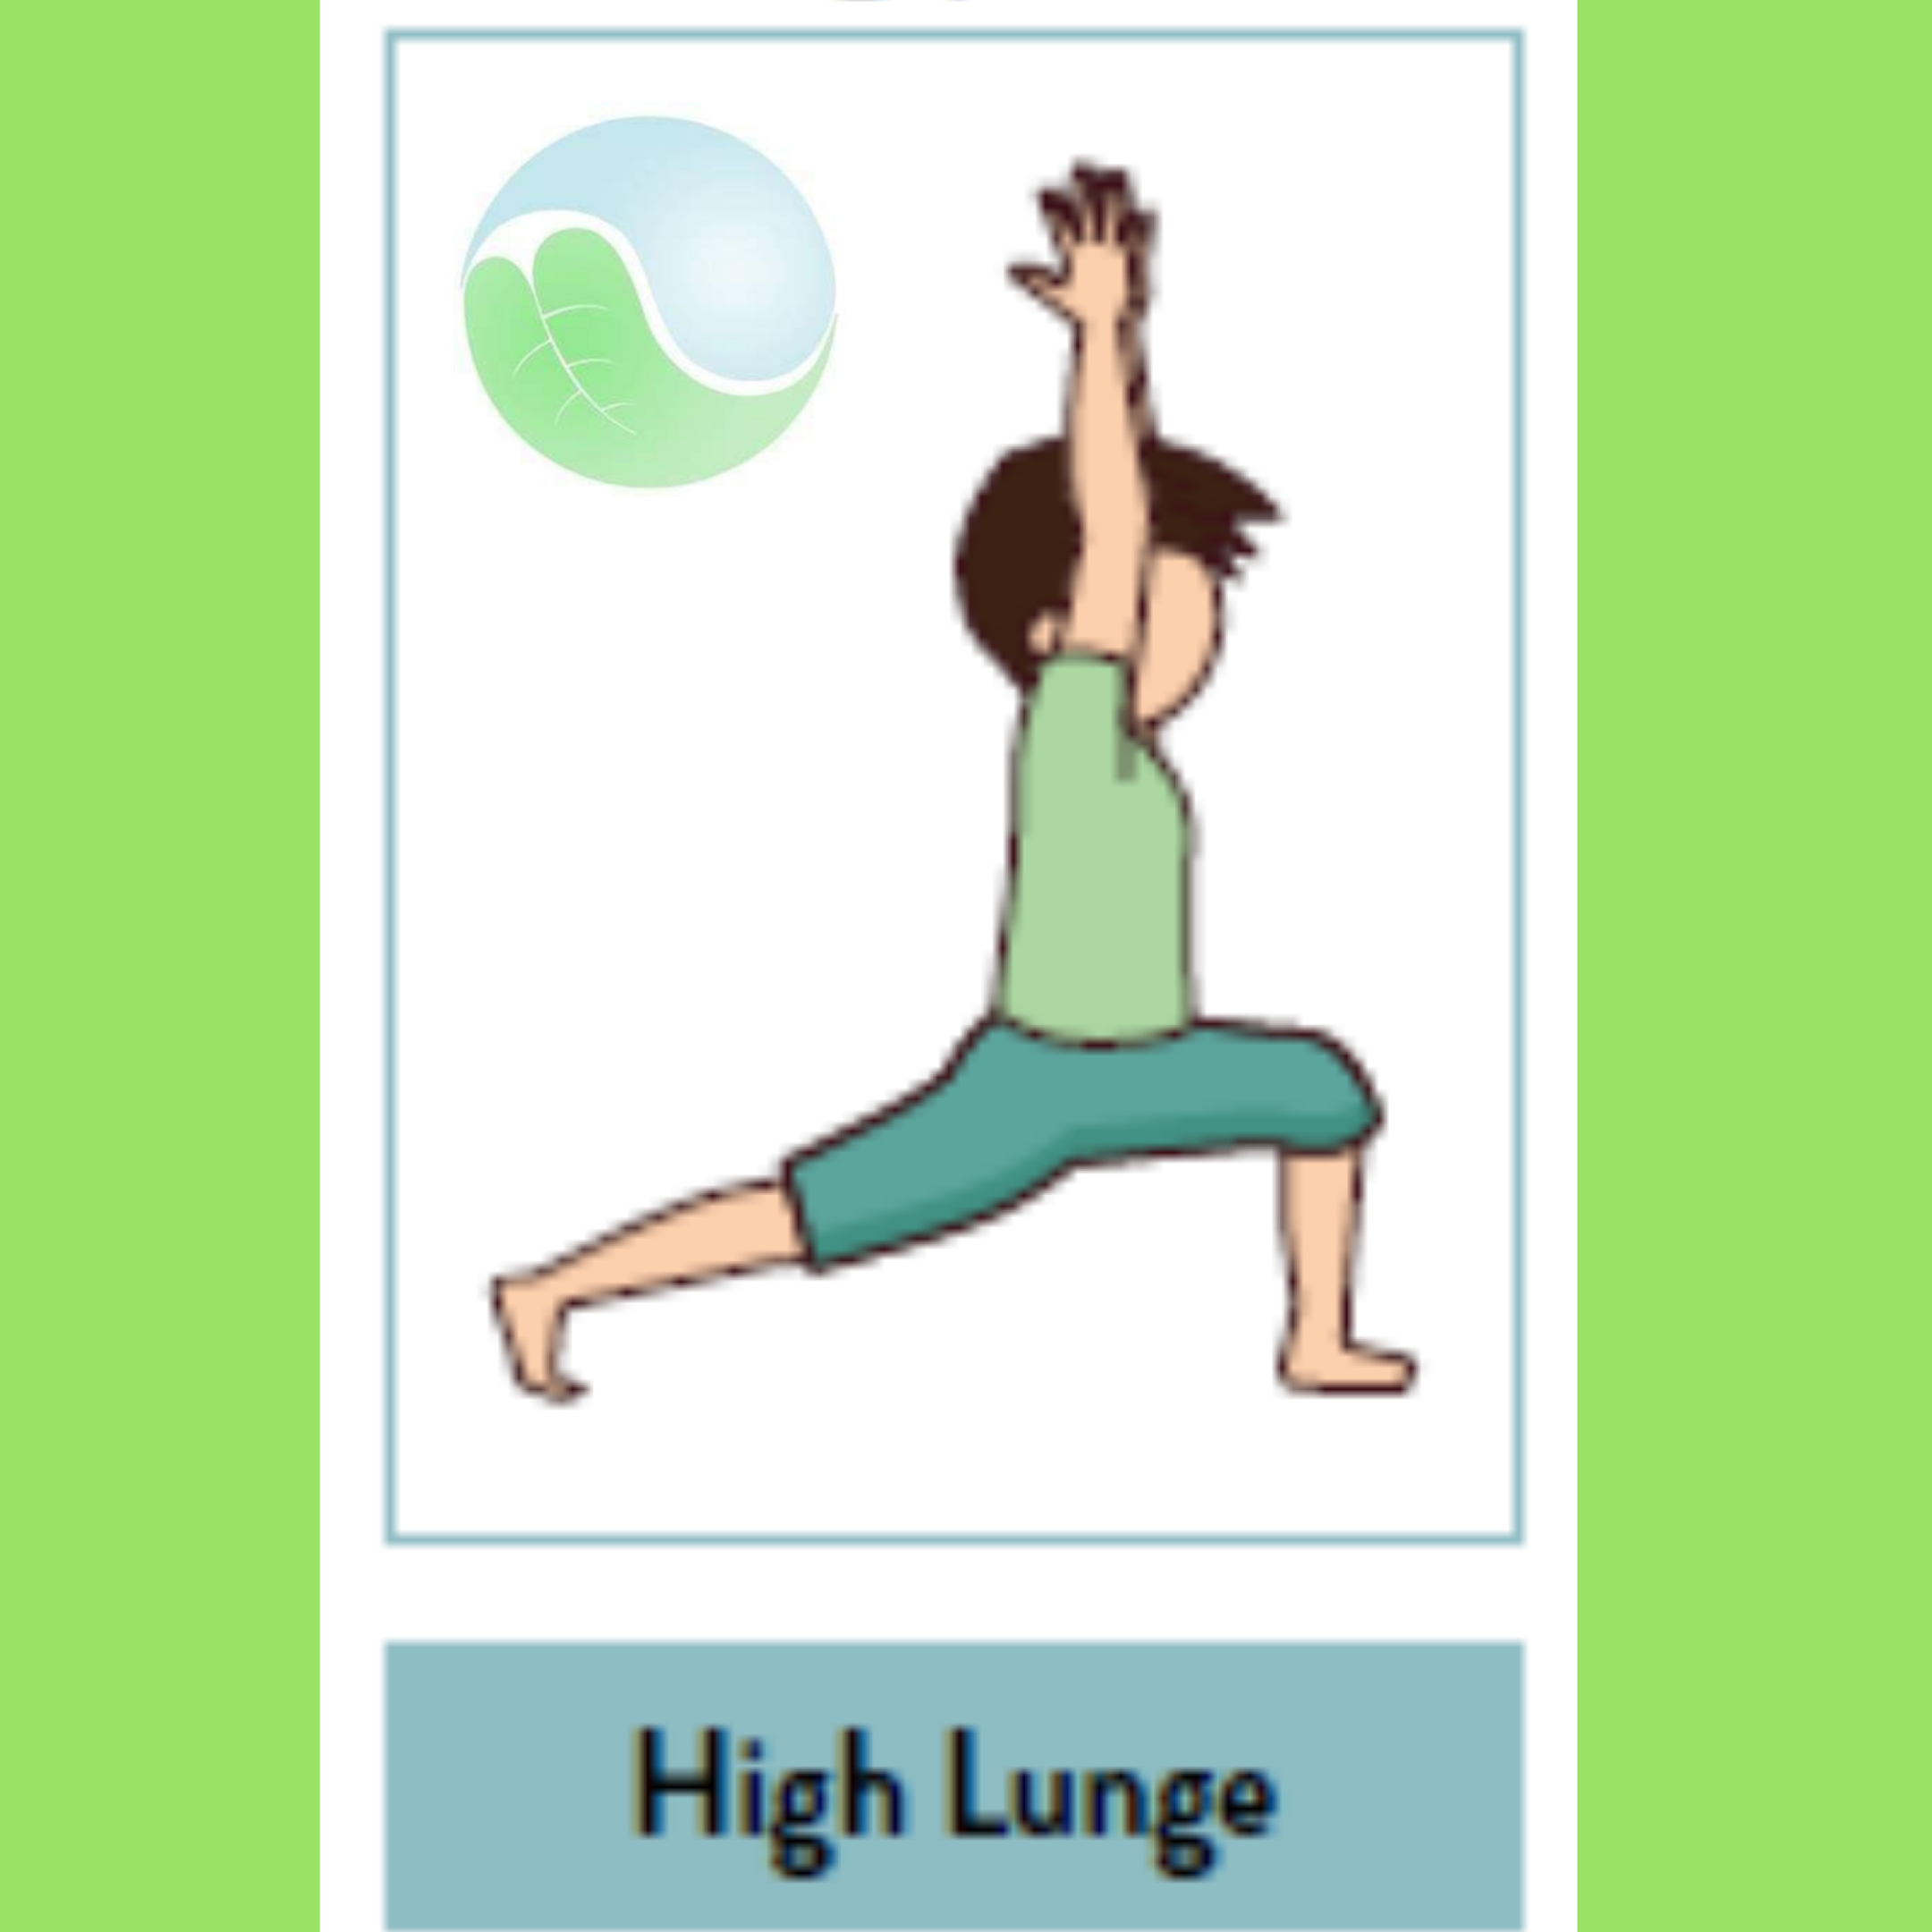 Try the bridge yoga pose to improve your posture